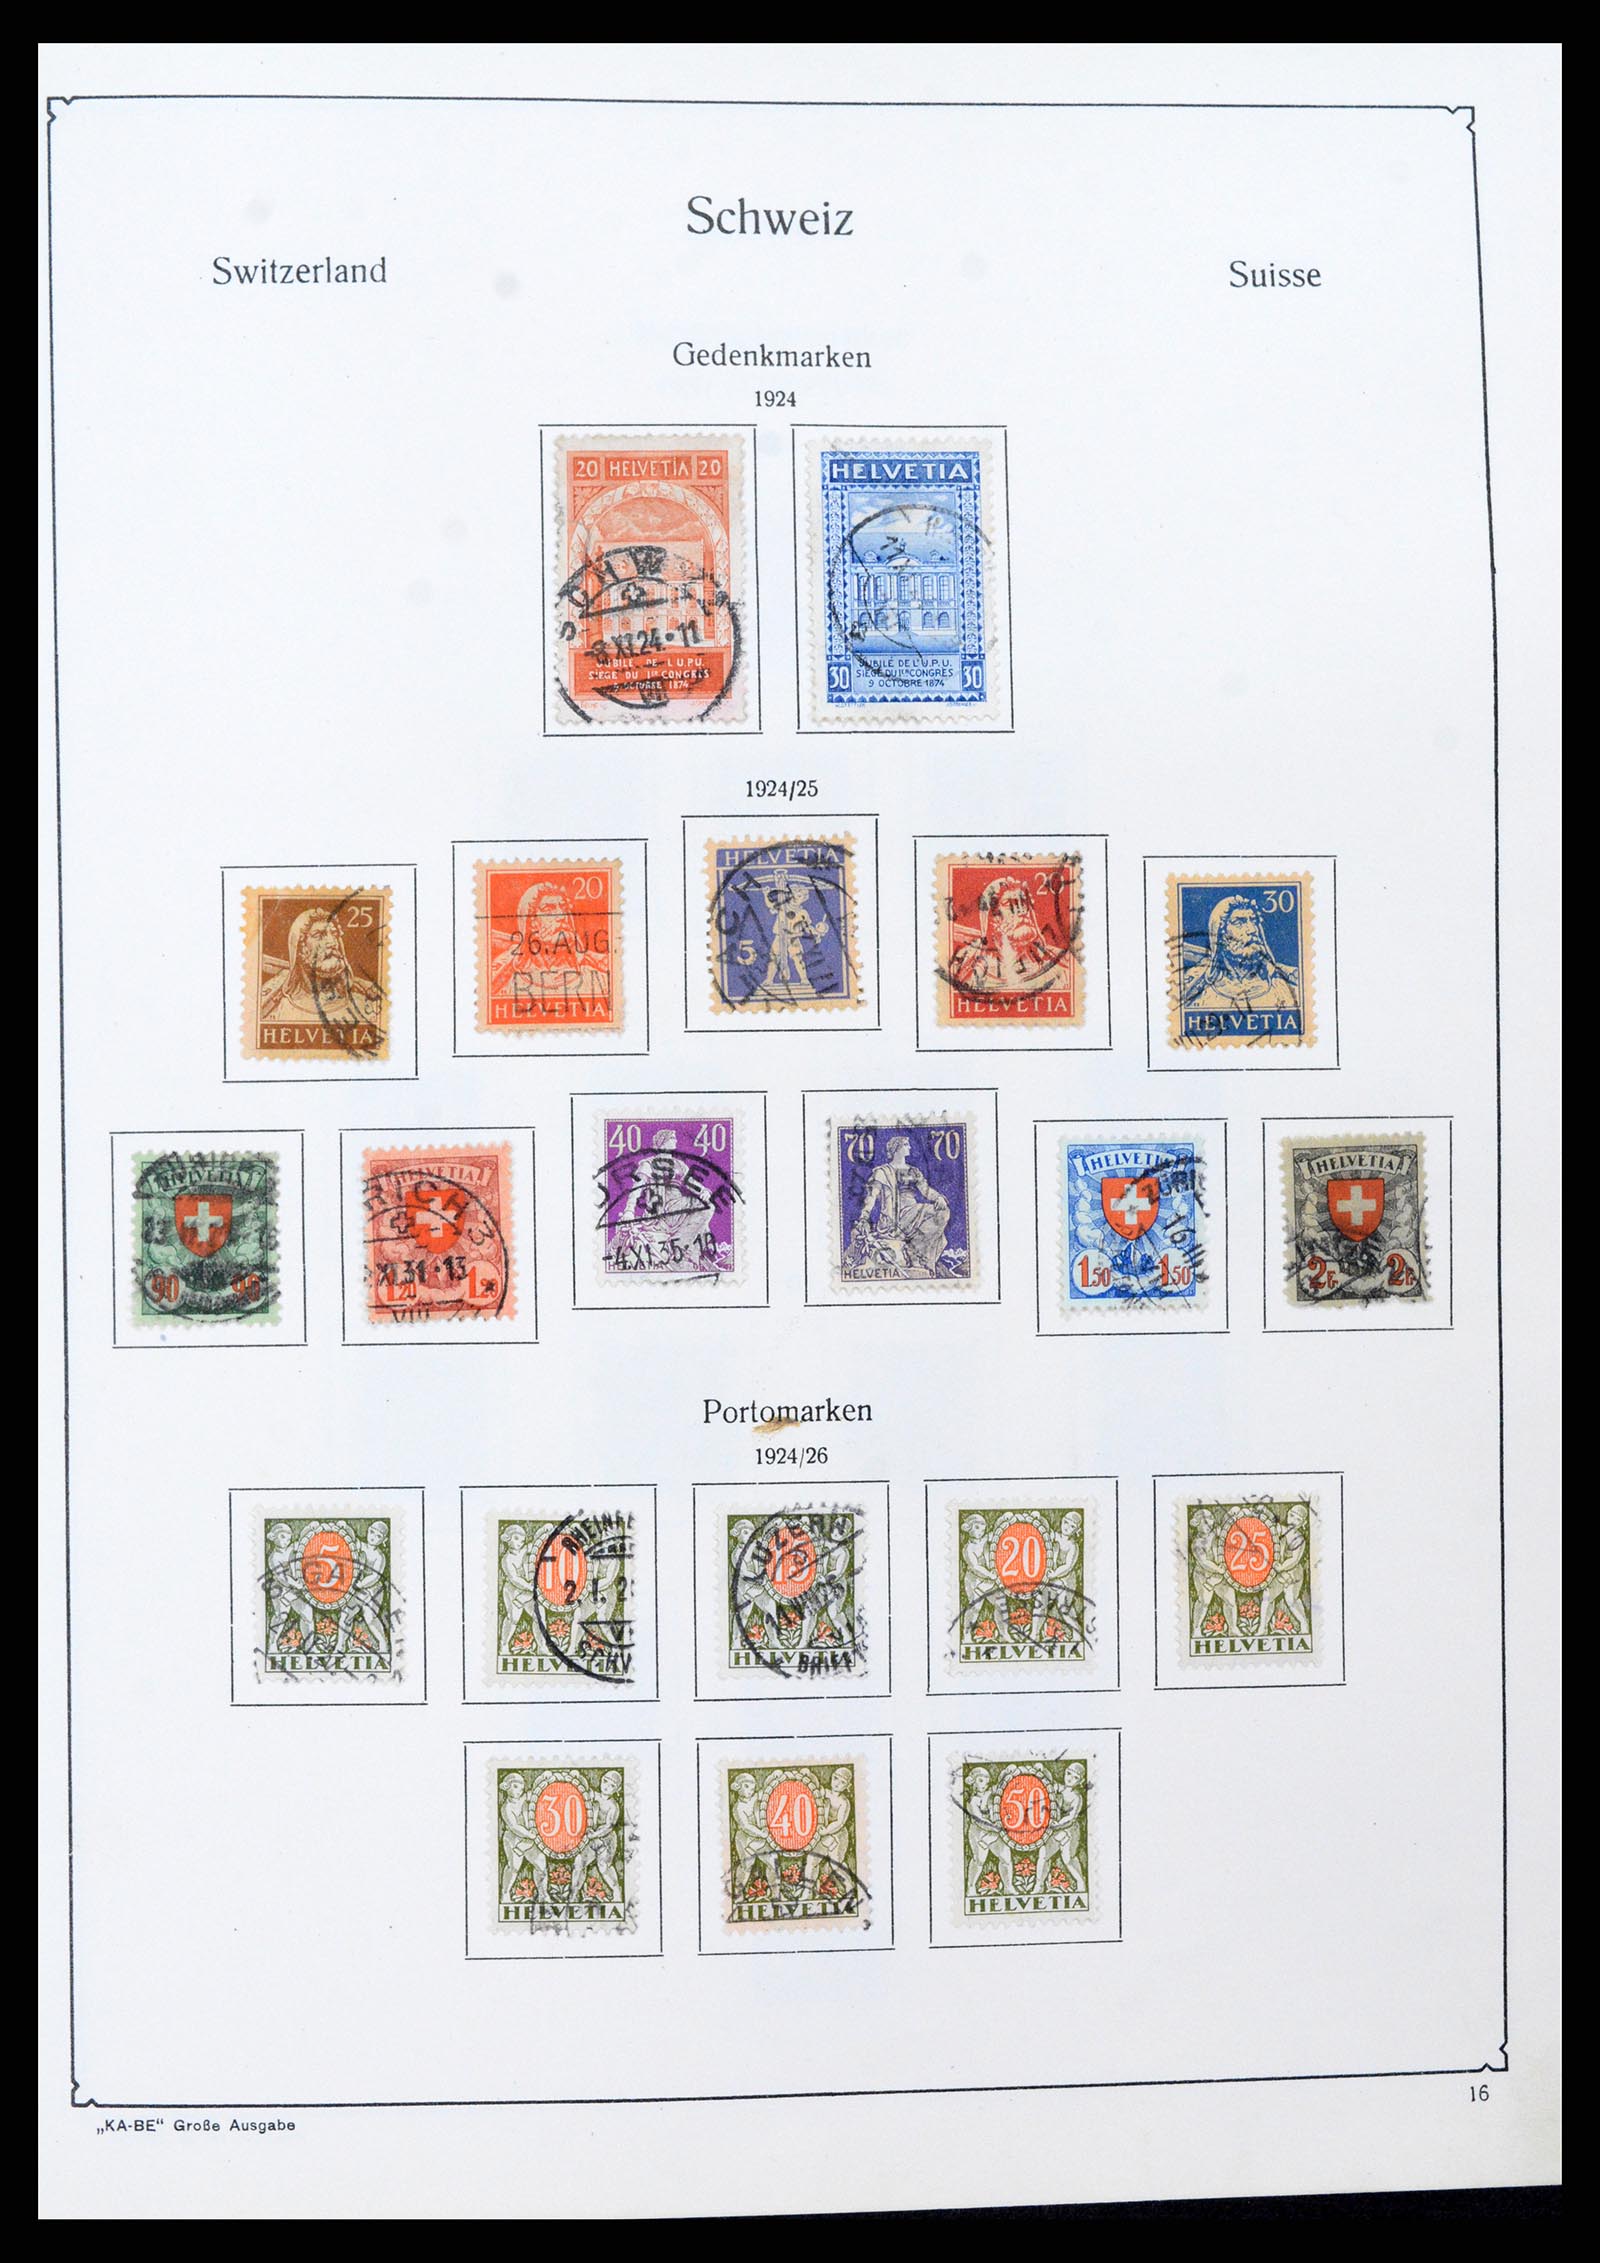 37588 015 - Stamp collection 37588 Switzerland 1854-1974.